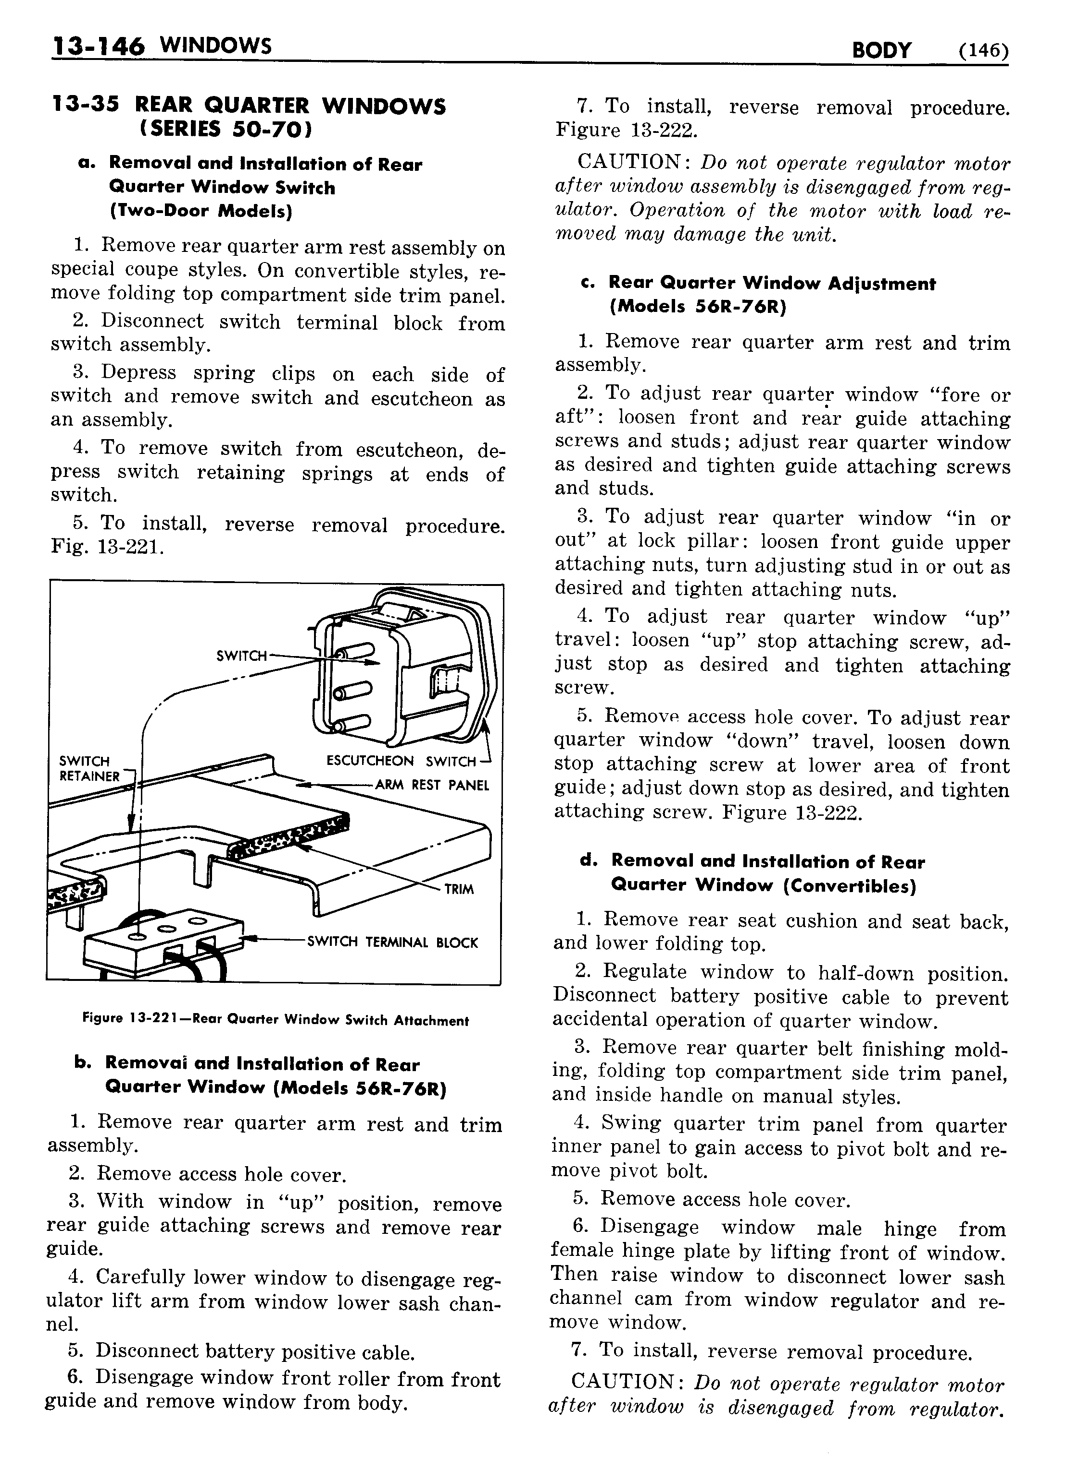 n_1957 Buick Body Service Manual-148-148.jpg